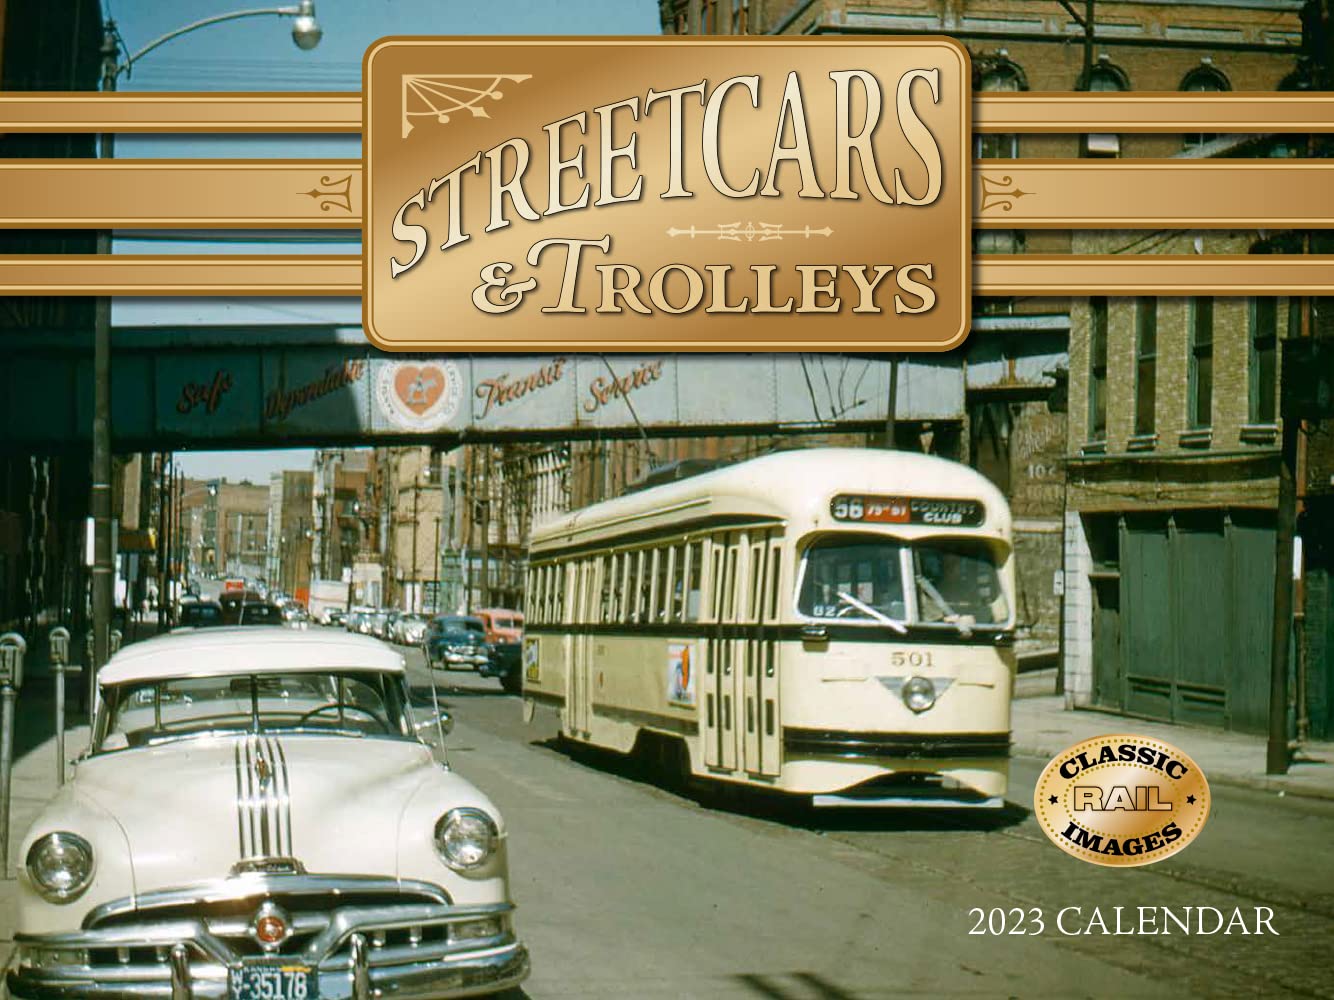 Tide-mark Street Cars and Trollies 2023 Wall Calendar